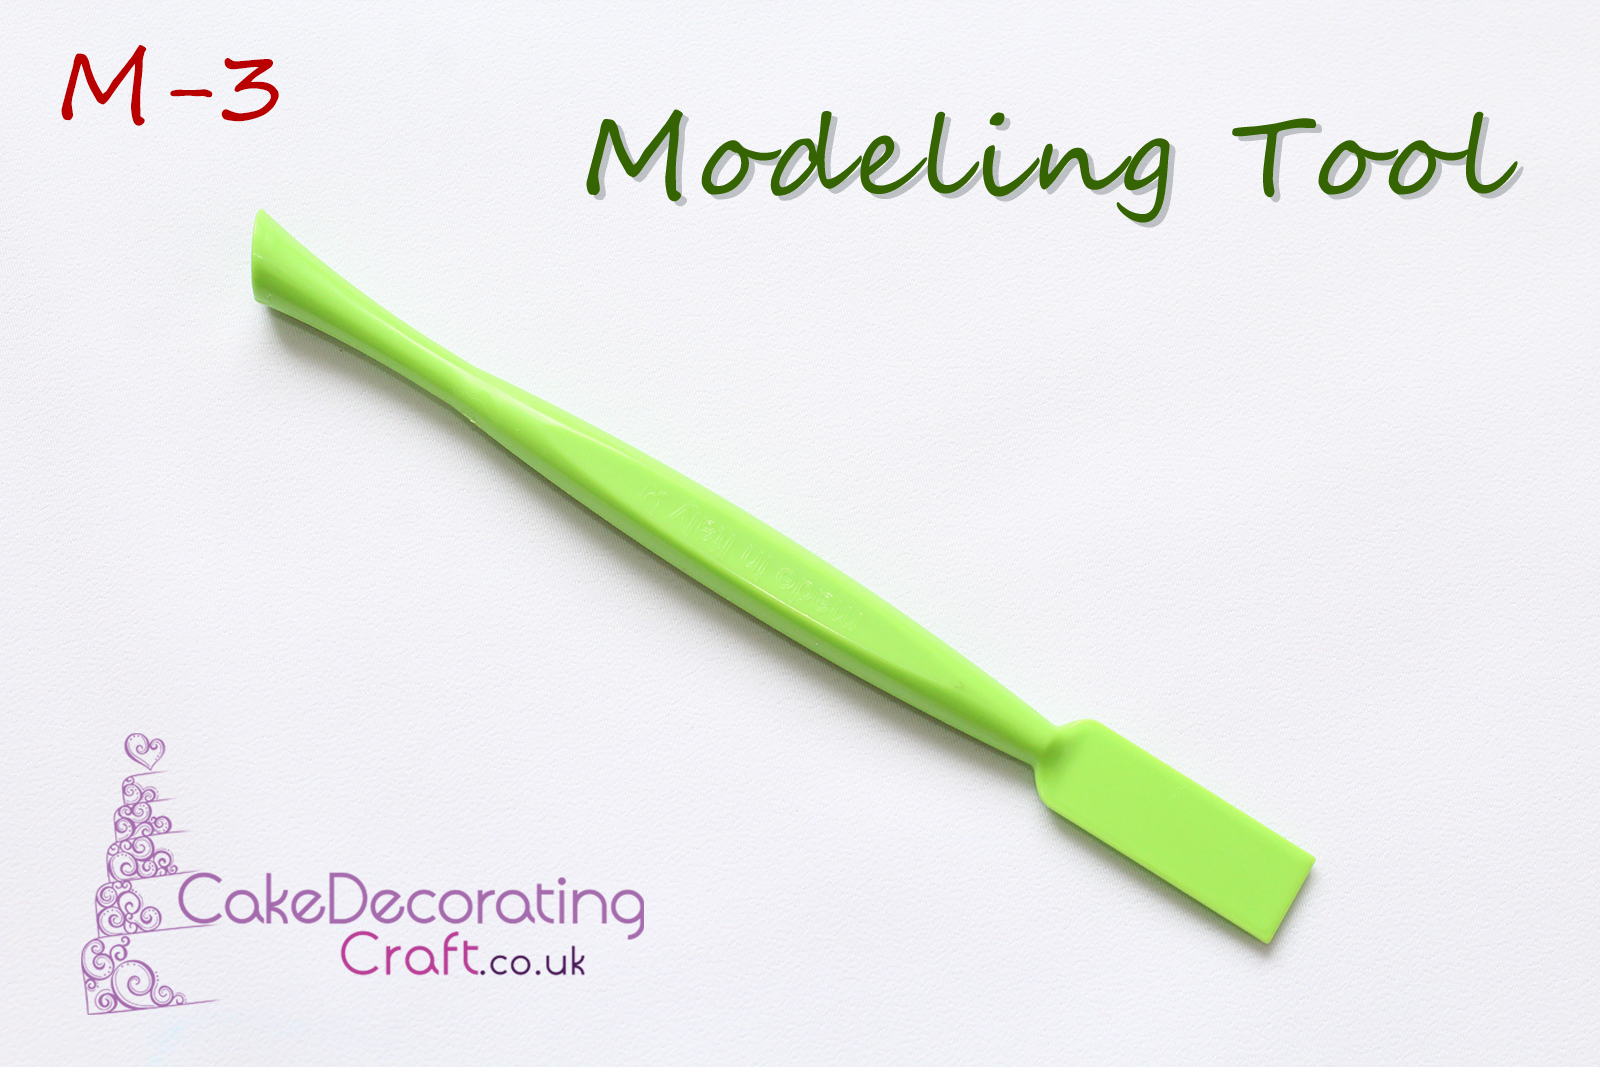 Cake Decorating Craft Modelling Tools | Double Ended | Gum Paste Flower Paste Modelling Sugar Paste Craft | M-3